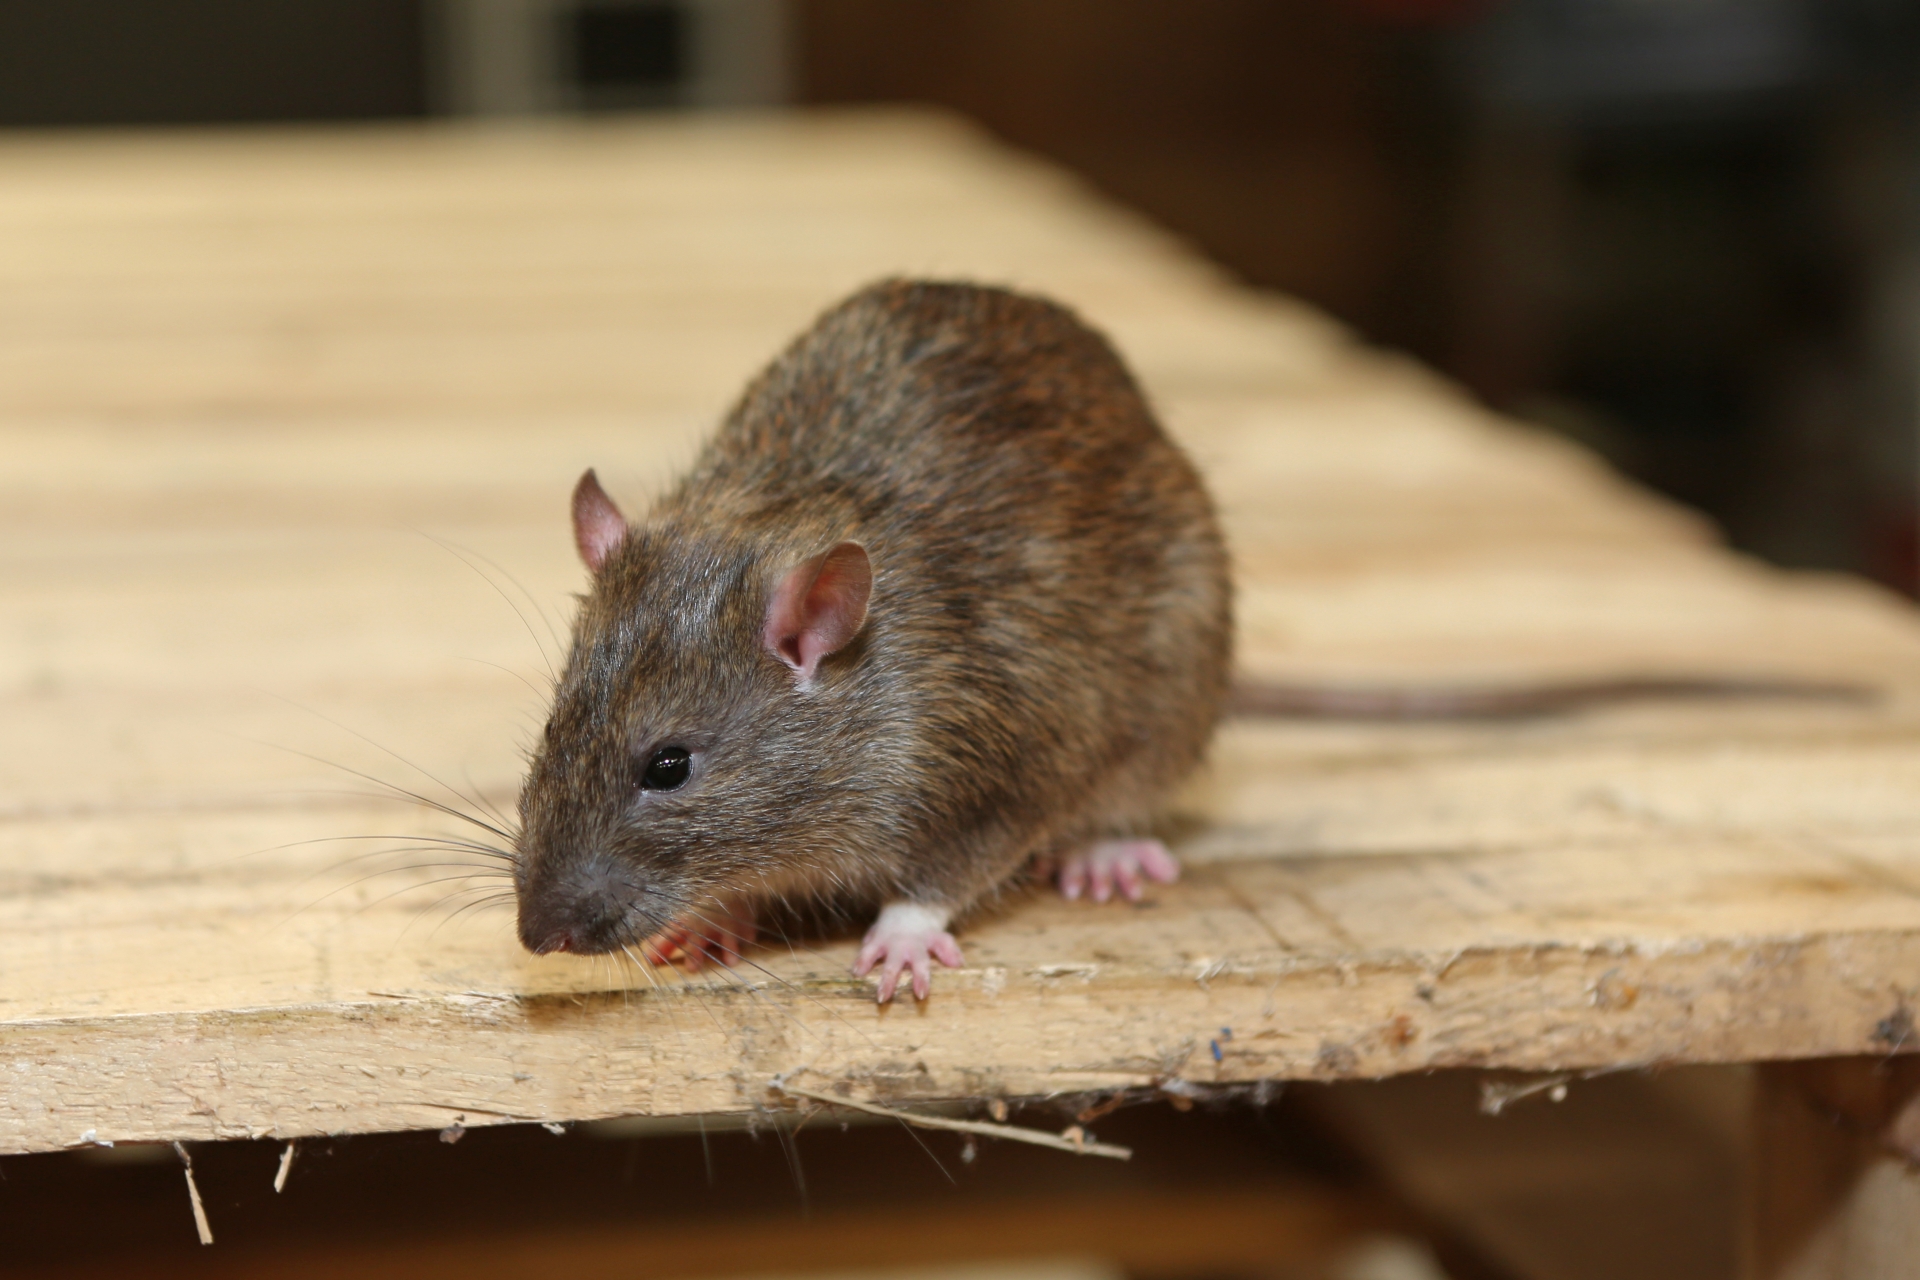 Rat extermination, Pest Control in Shepherd's Bush, W12. Call Now 020 8166 9746